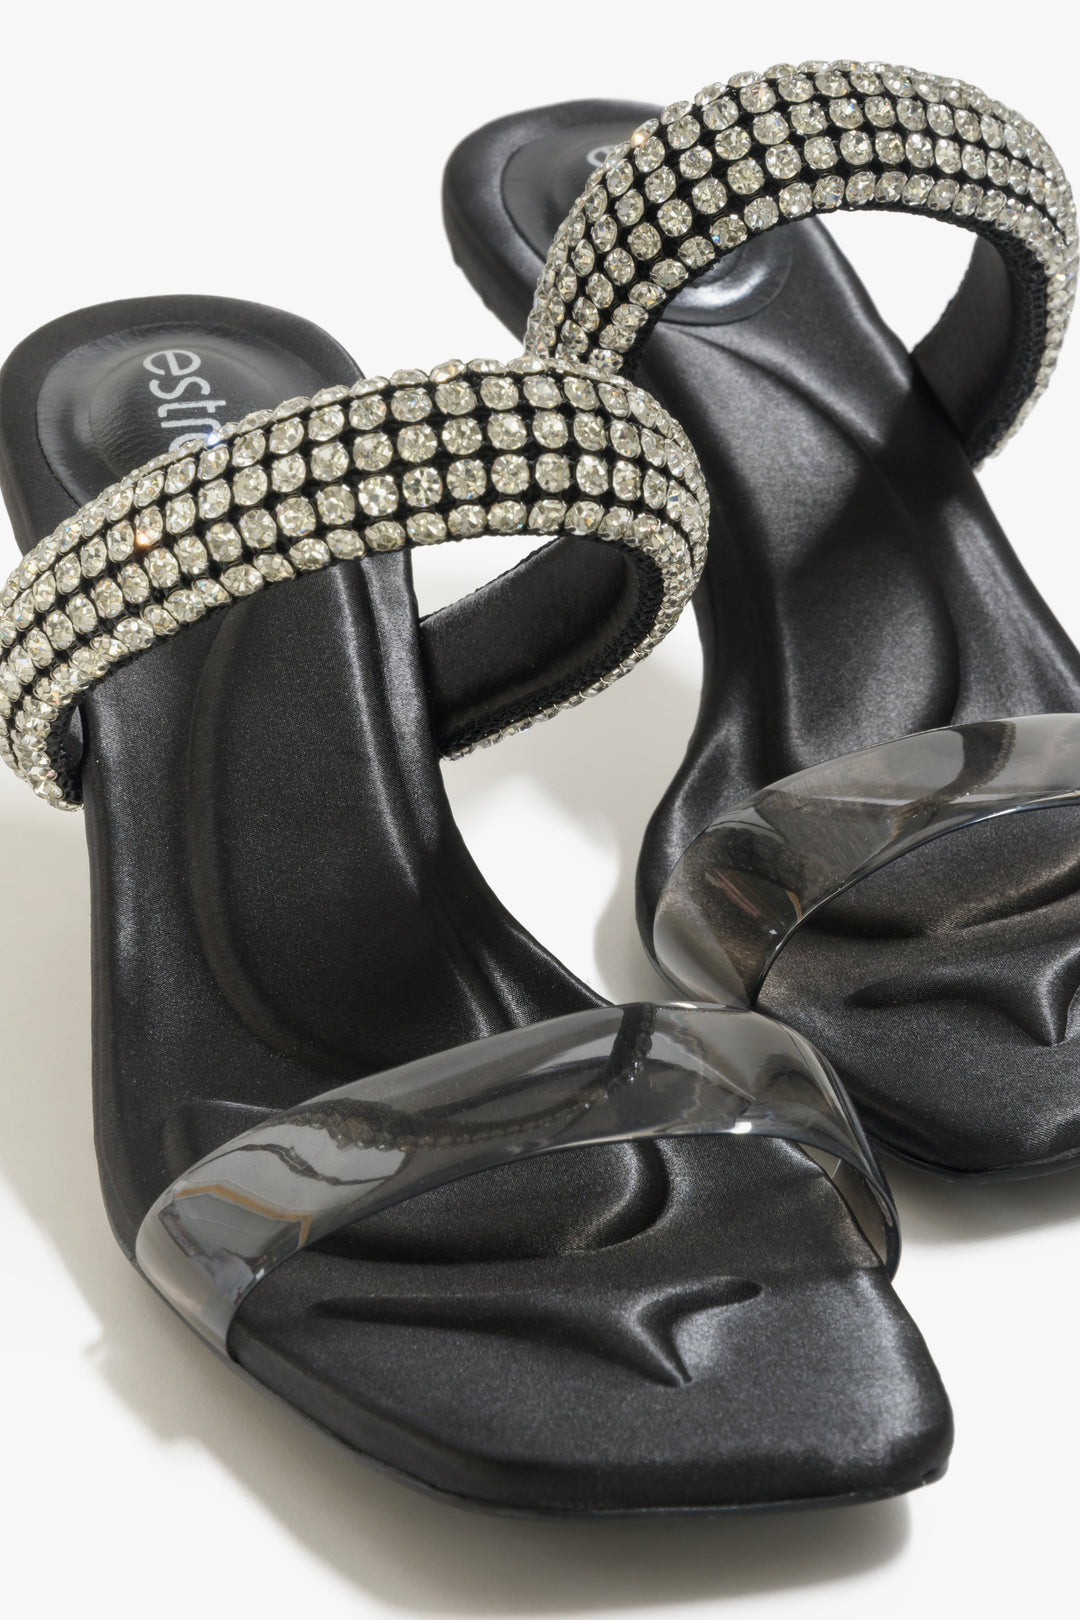 Women's black slide sandals with stiletto heel and zirconia - presentation form the top.